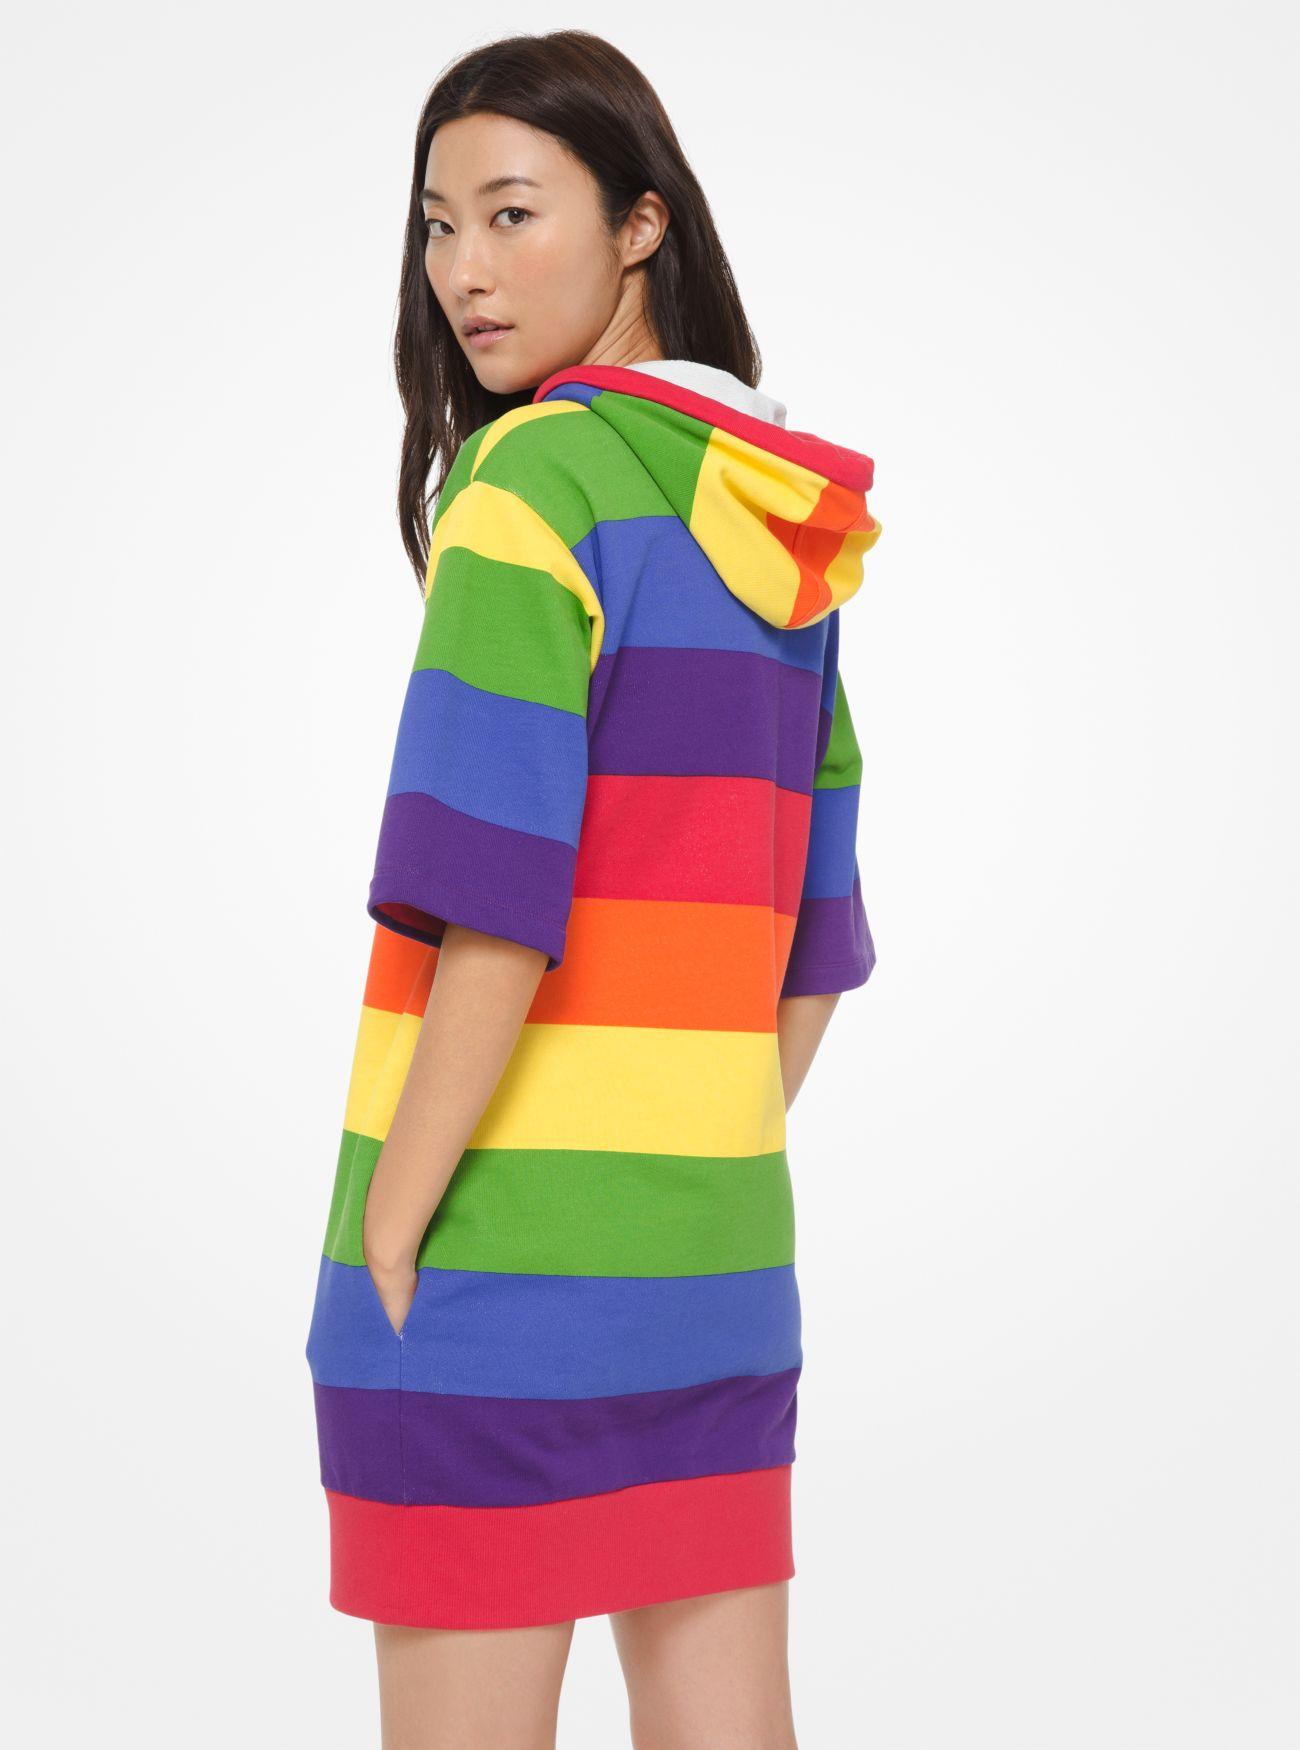 michael kors rainbow sweater